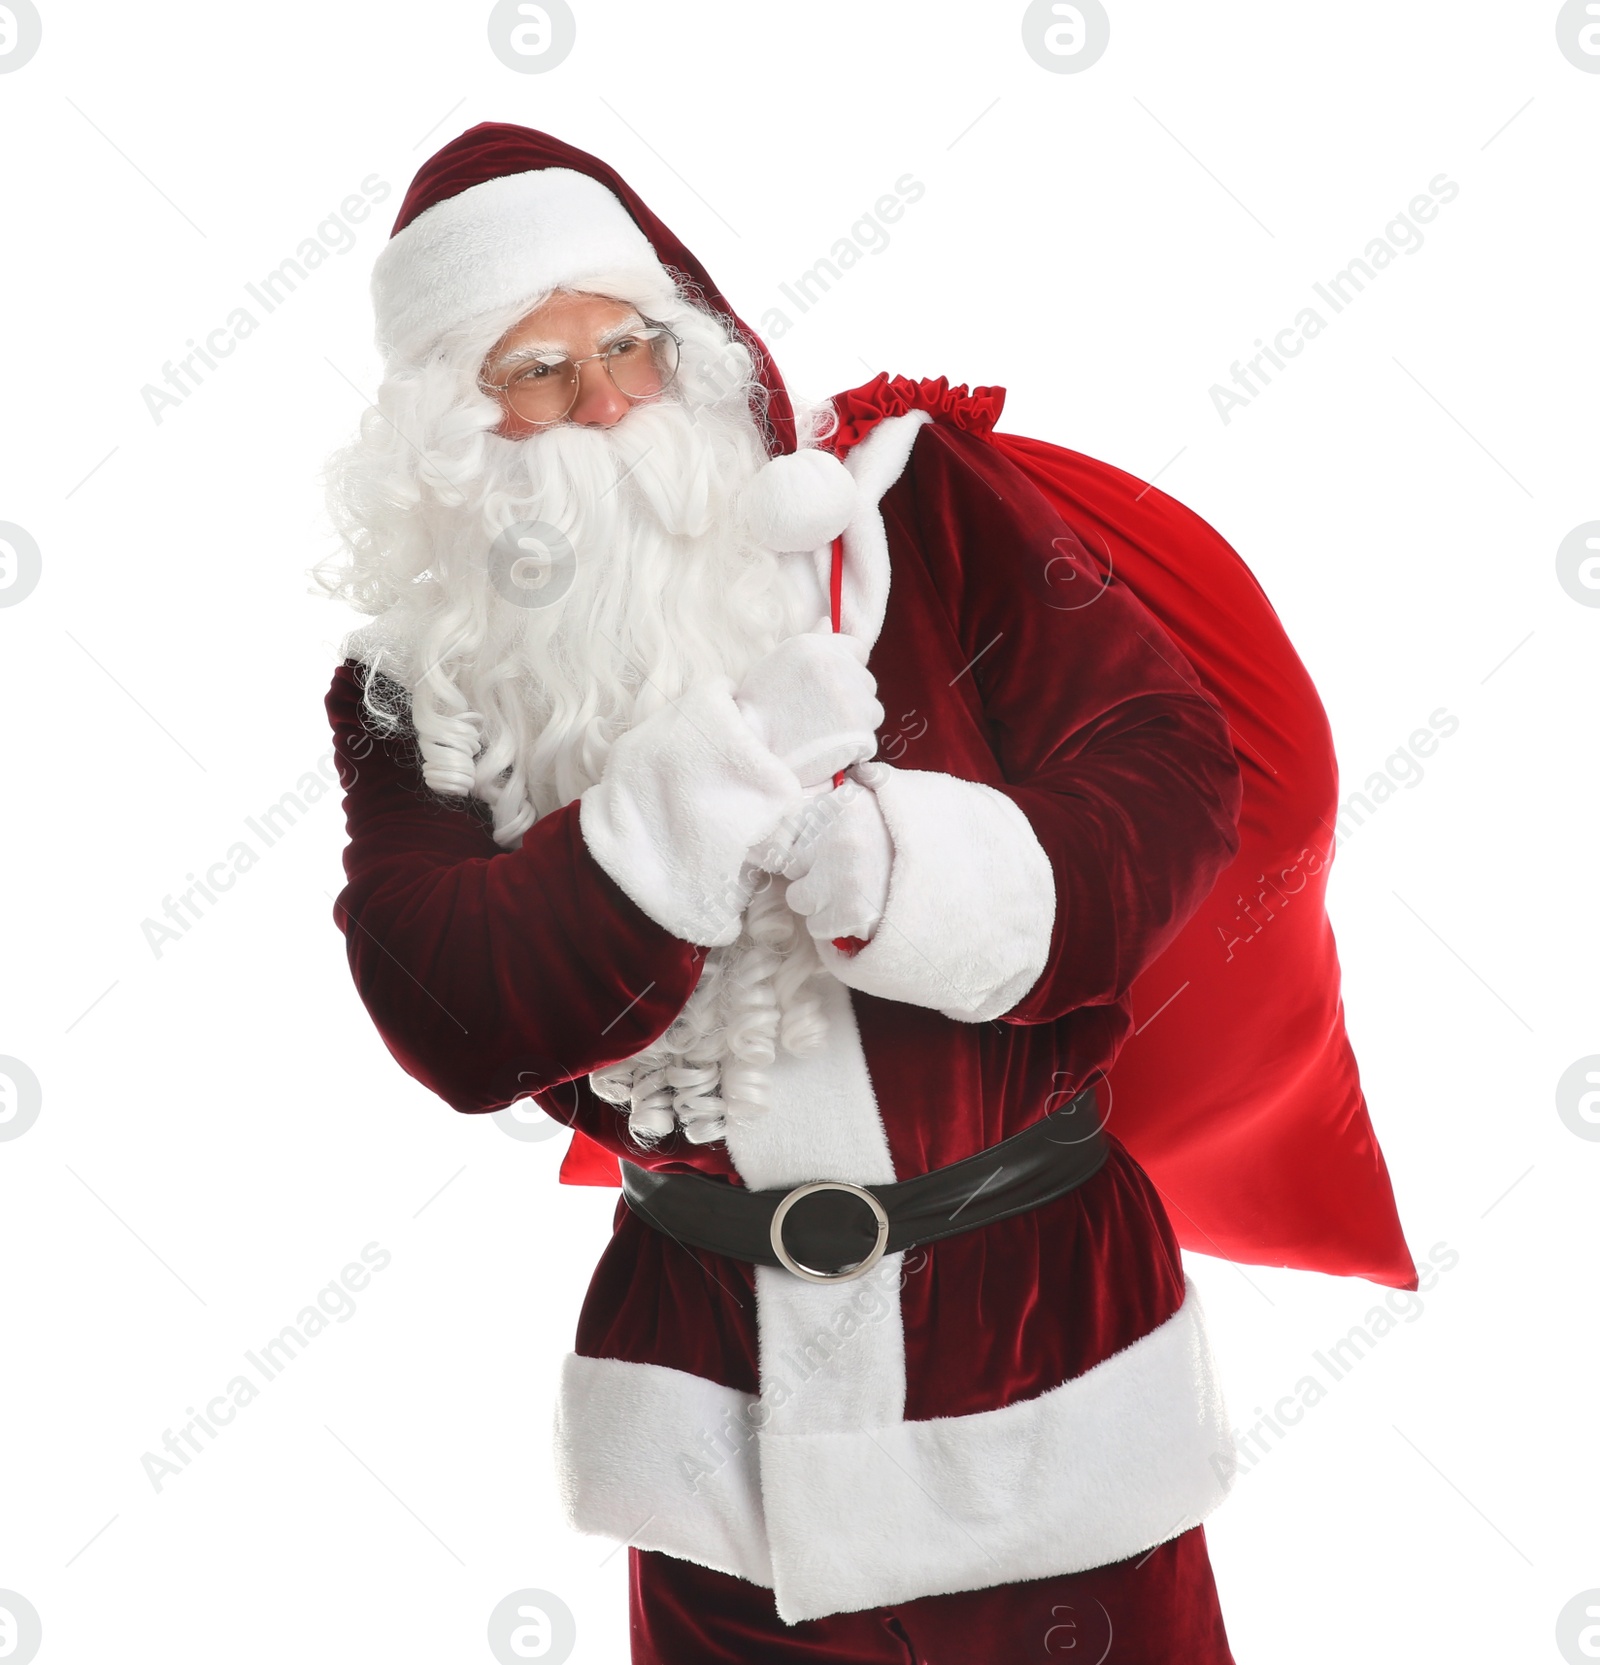 Photo of Santa Claus with sack on white background